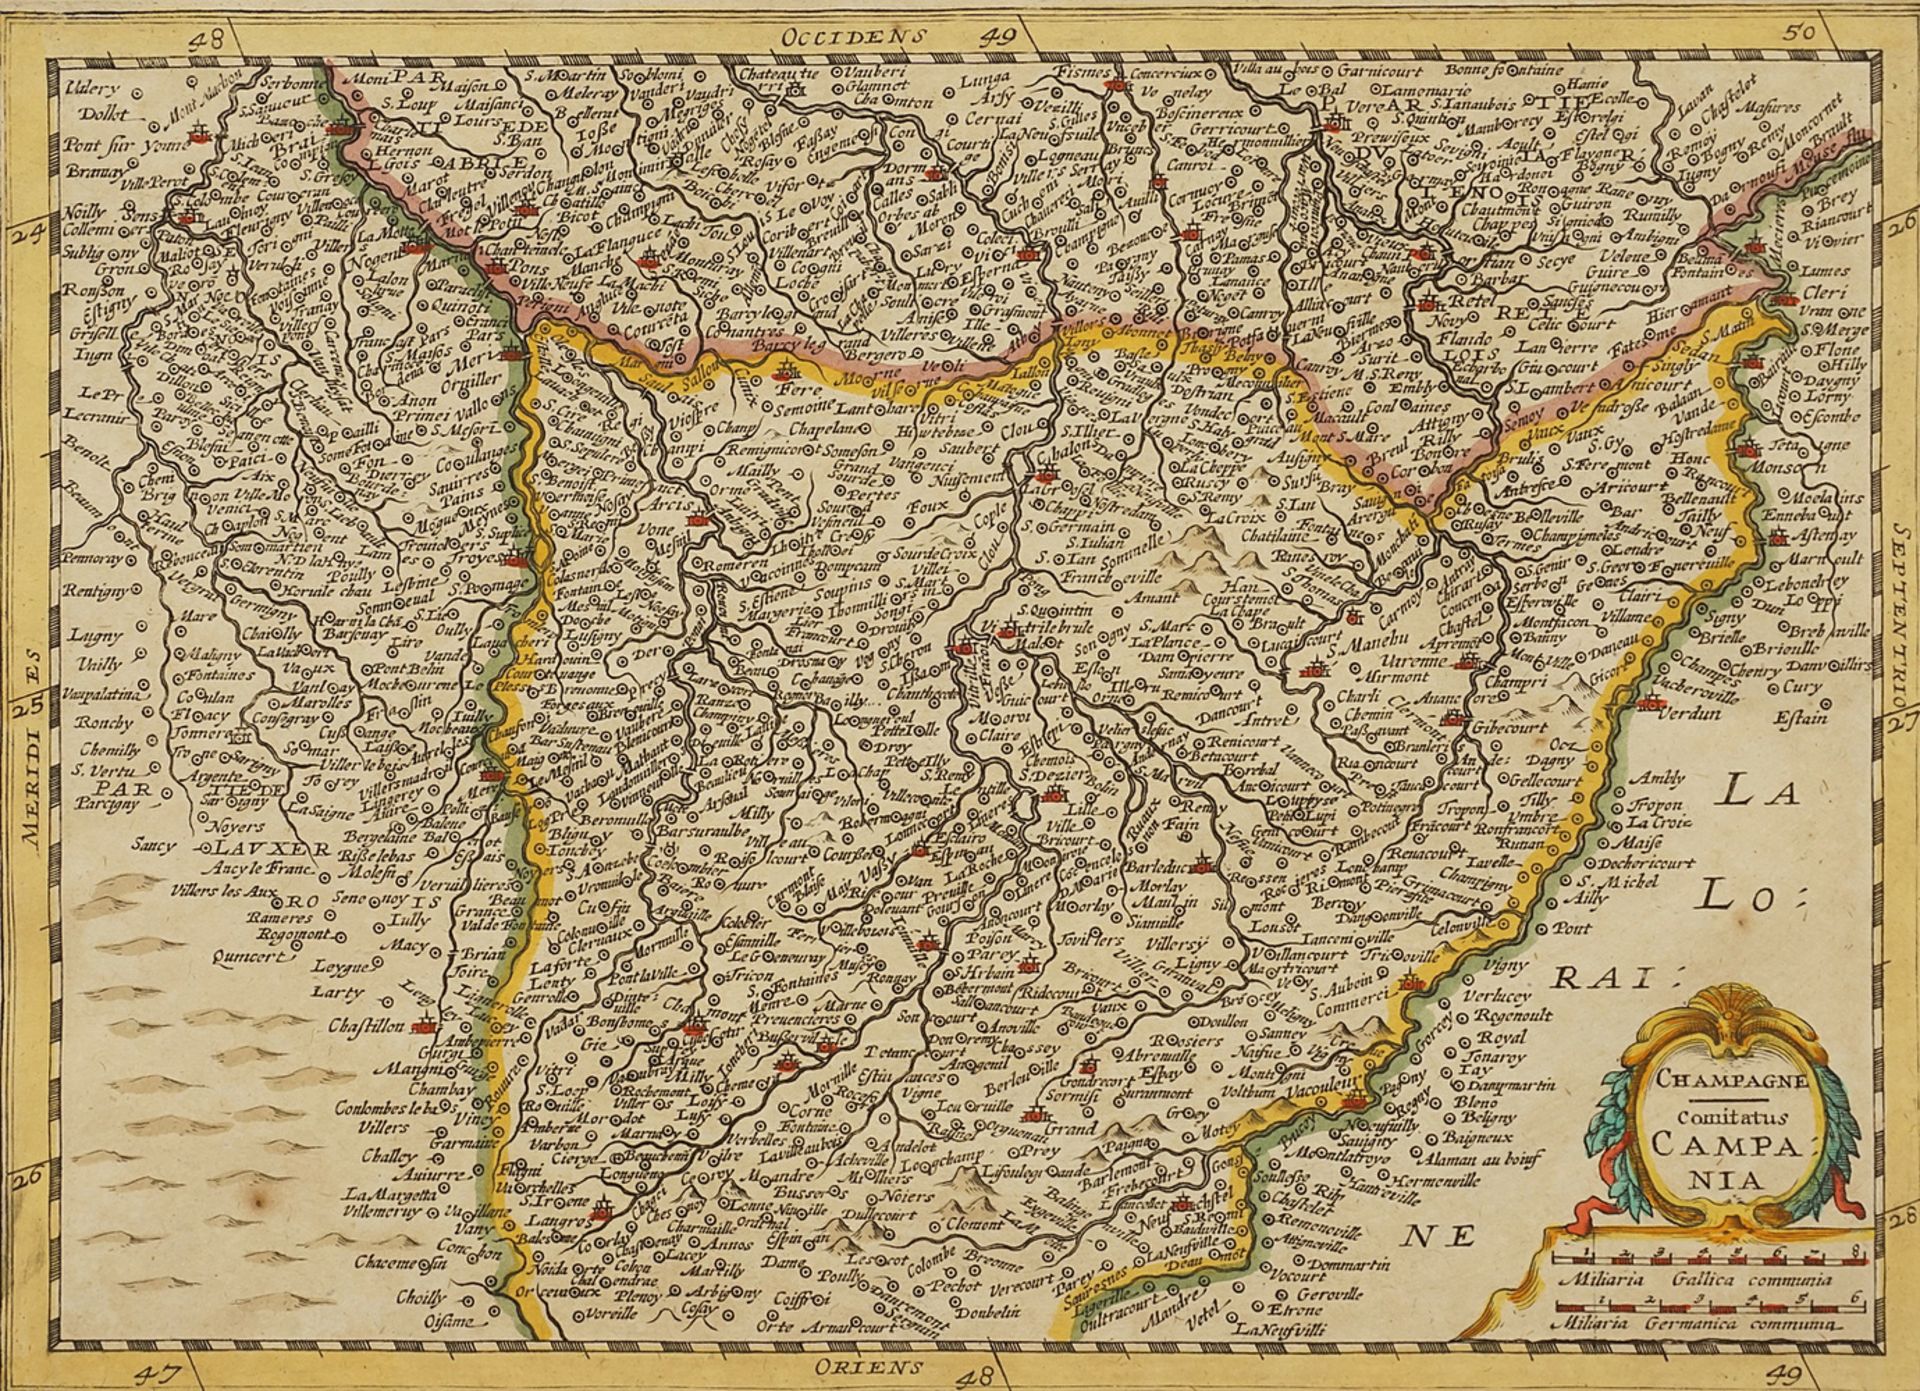 Johannes Janssonius (1588-1664), Map of Champagne